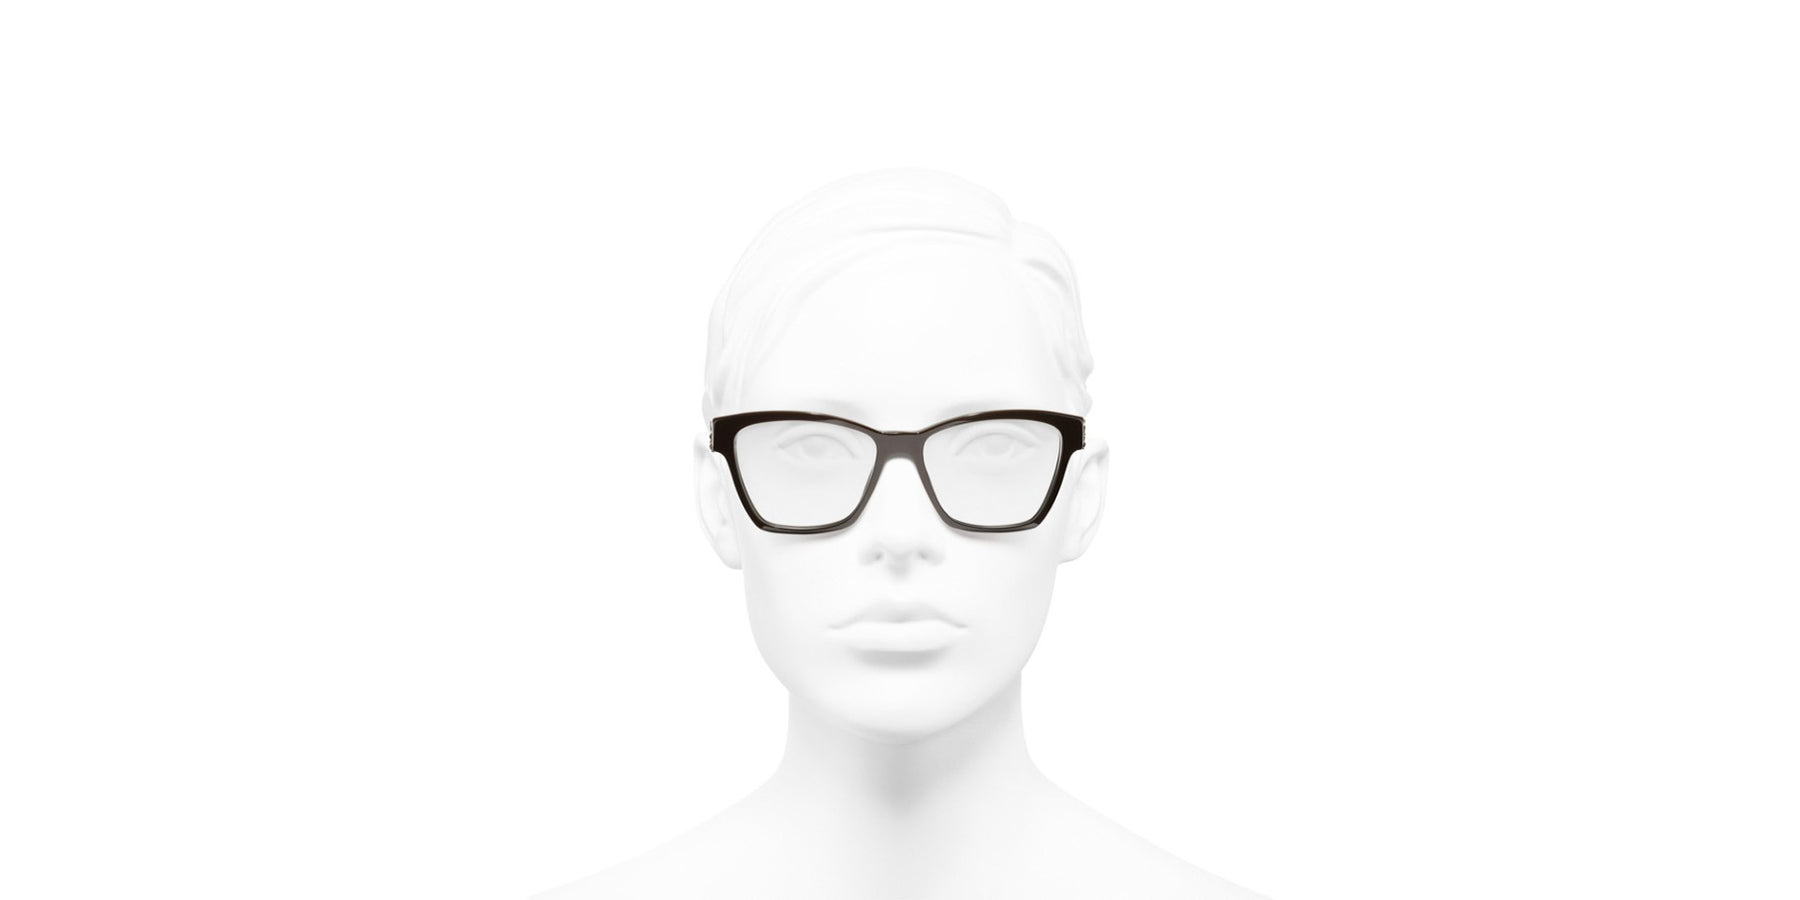 Chanel 3408Q 1663 New Eyeglass Frames for Sale in Atlanta, GA